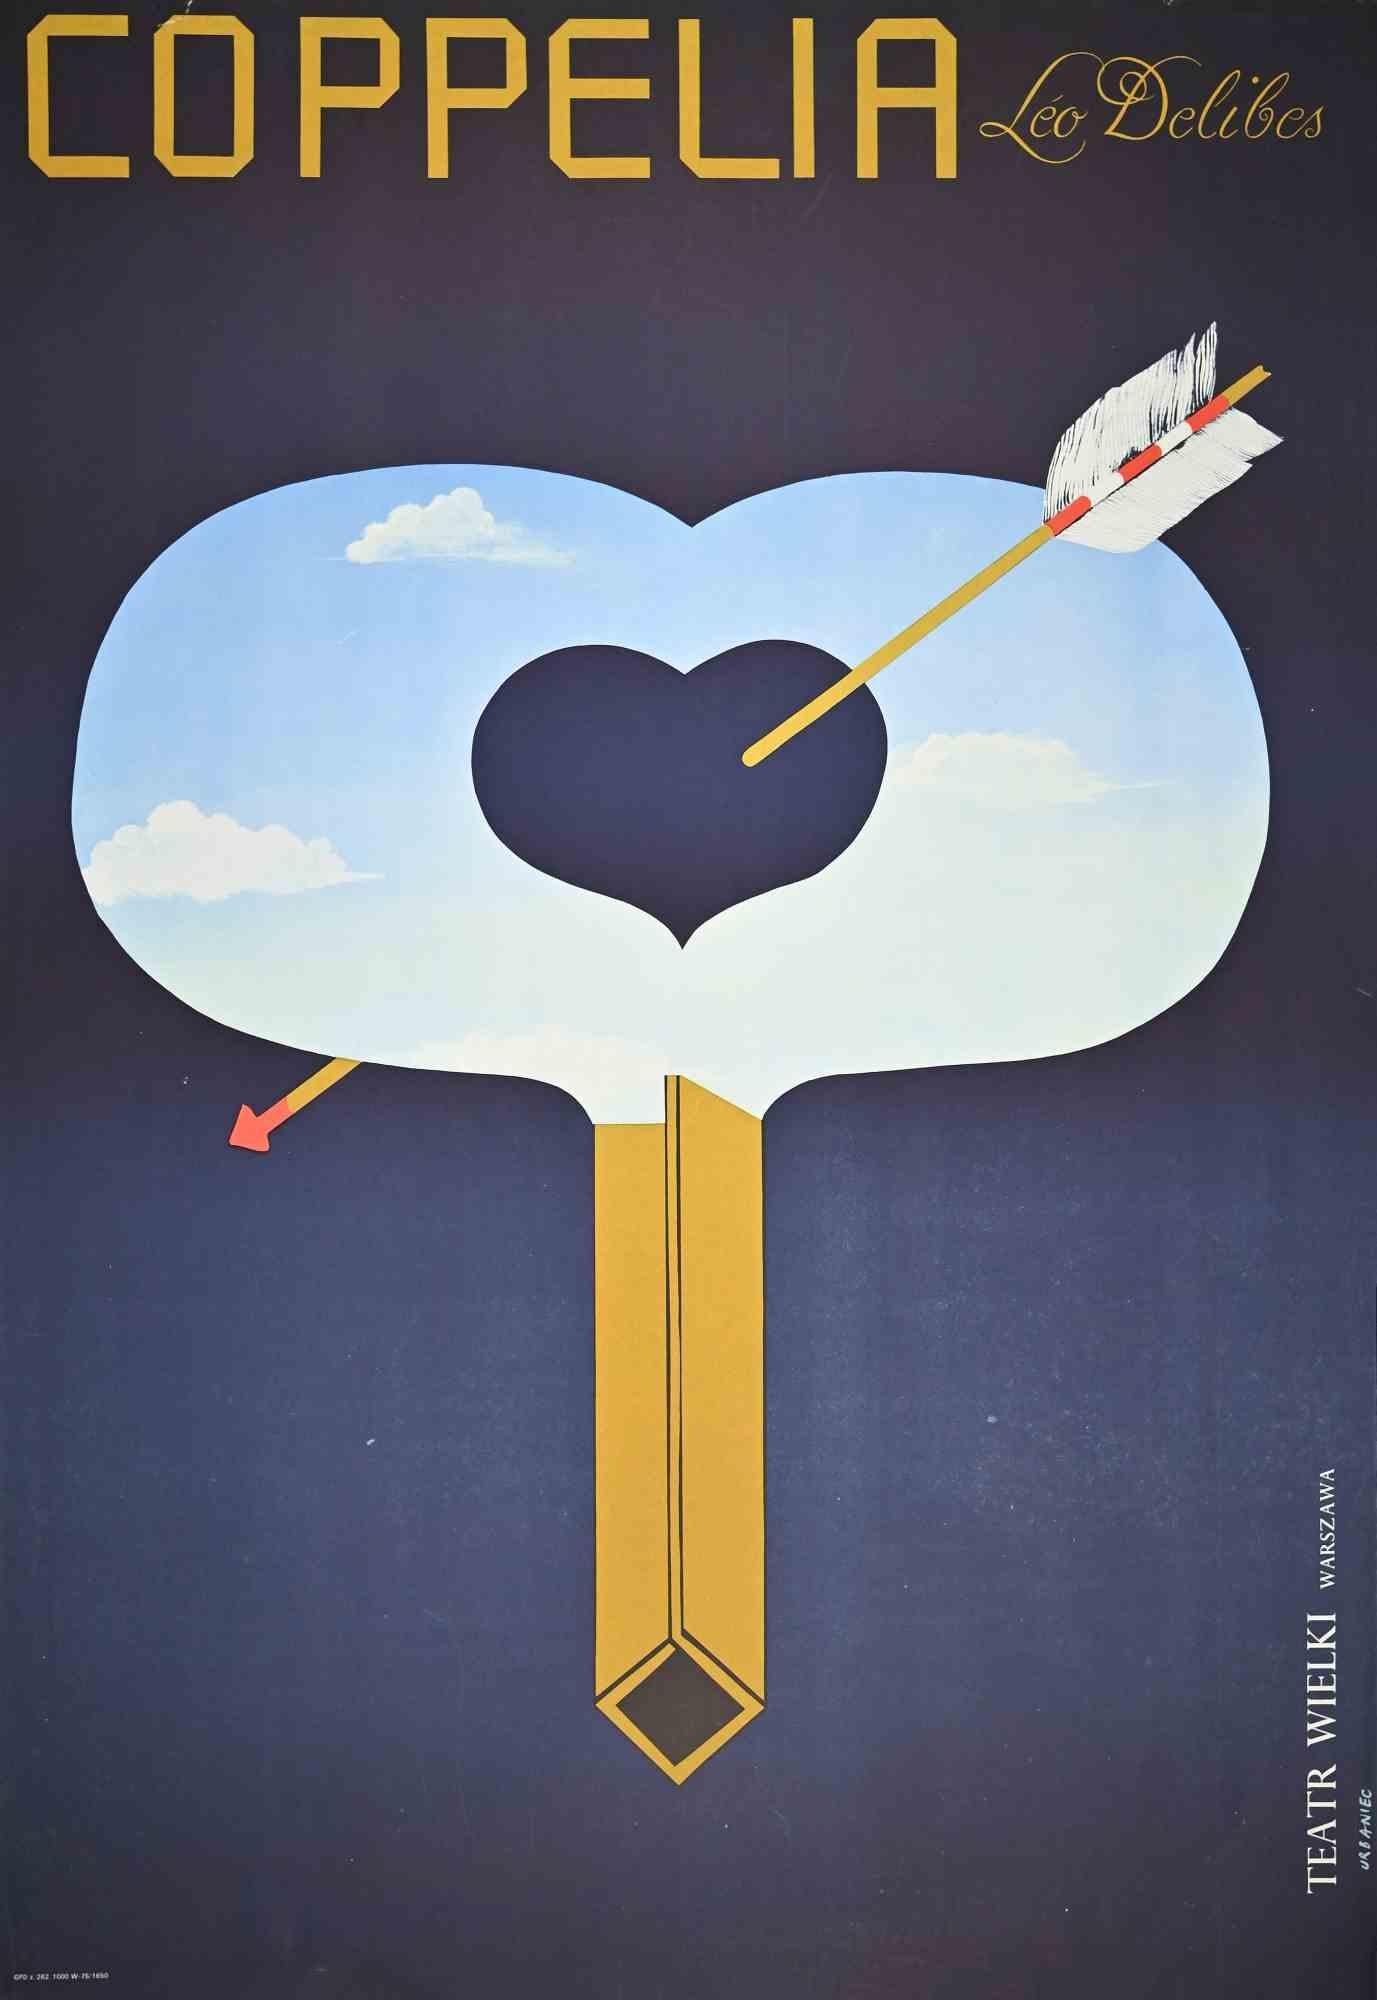 Wielki Theatre-Manifesto - Offset Print by M. Urbaniec - 1975